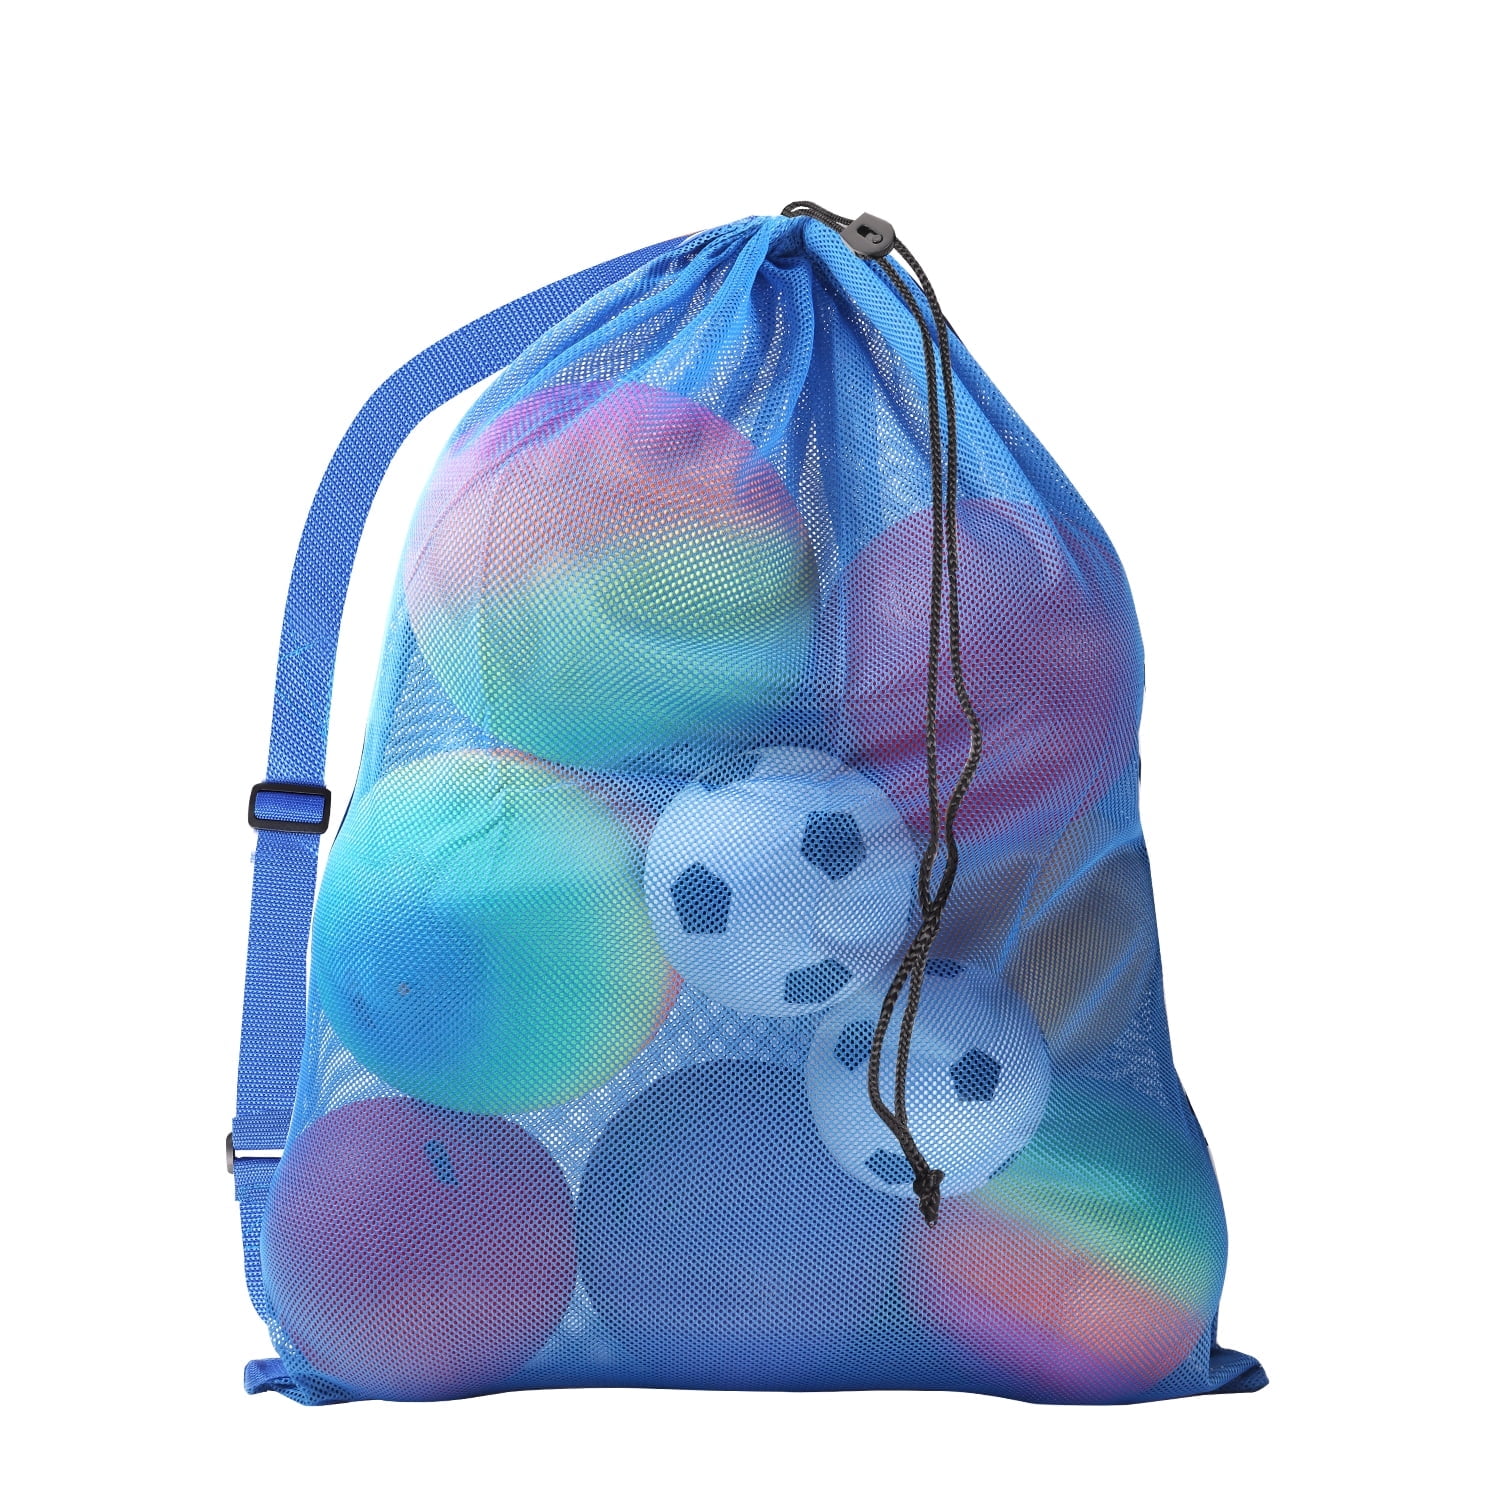 GSE Games & Sports Expert Extra-Large Mesh Drawstring Sports Equipment Duffel Shoulder Bag - Blue